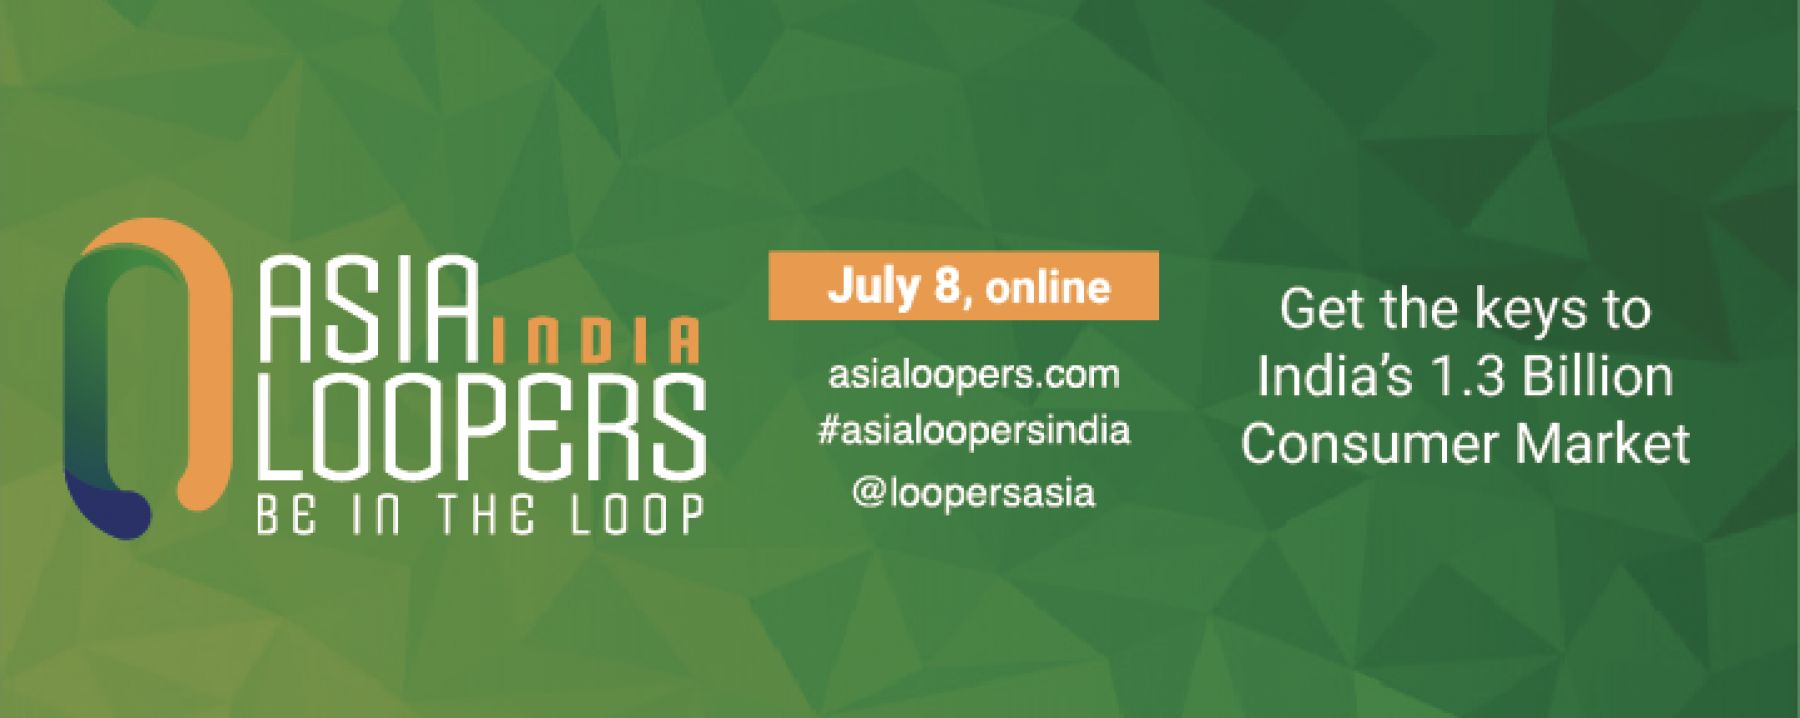 Asia Loopers Inde, le 8 juillet 2021